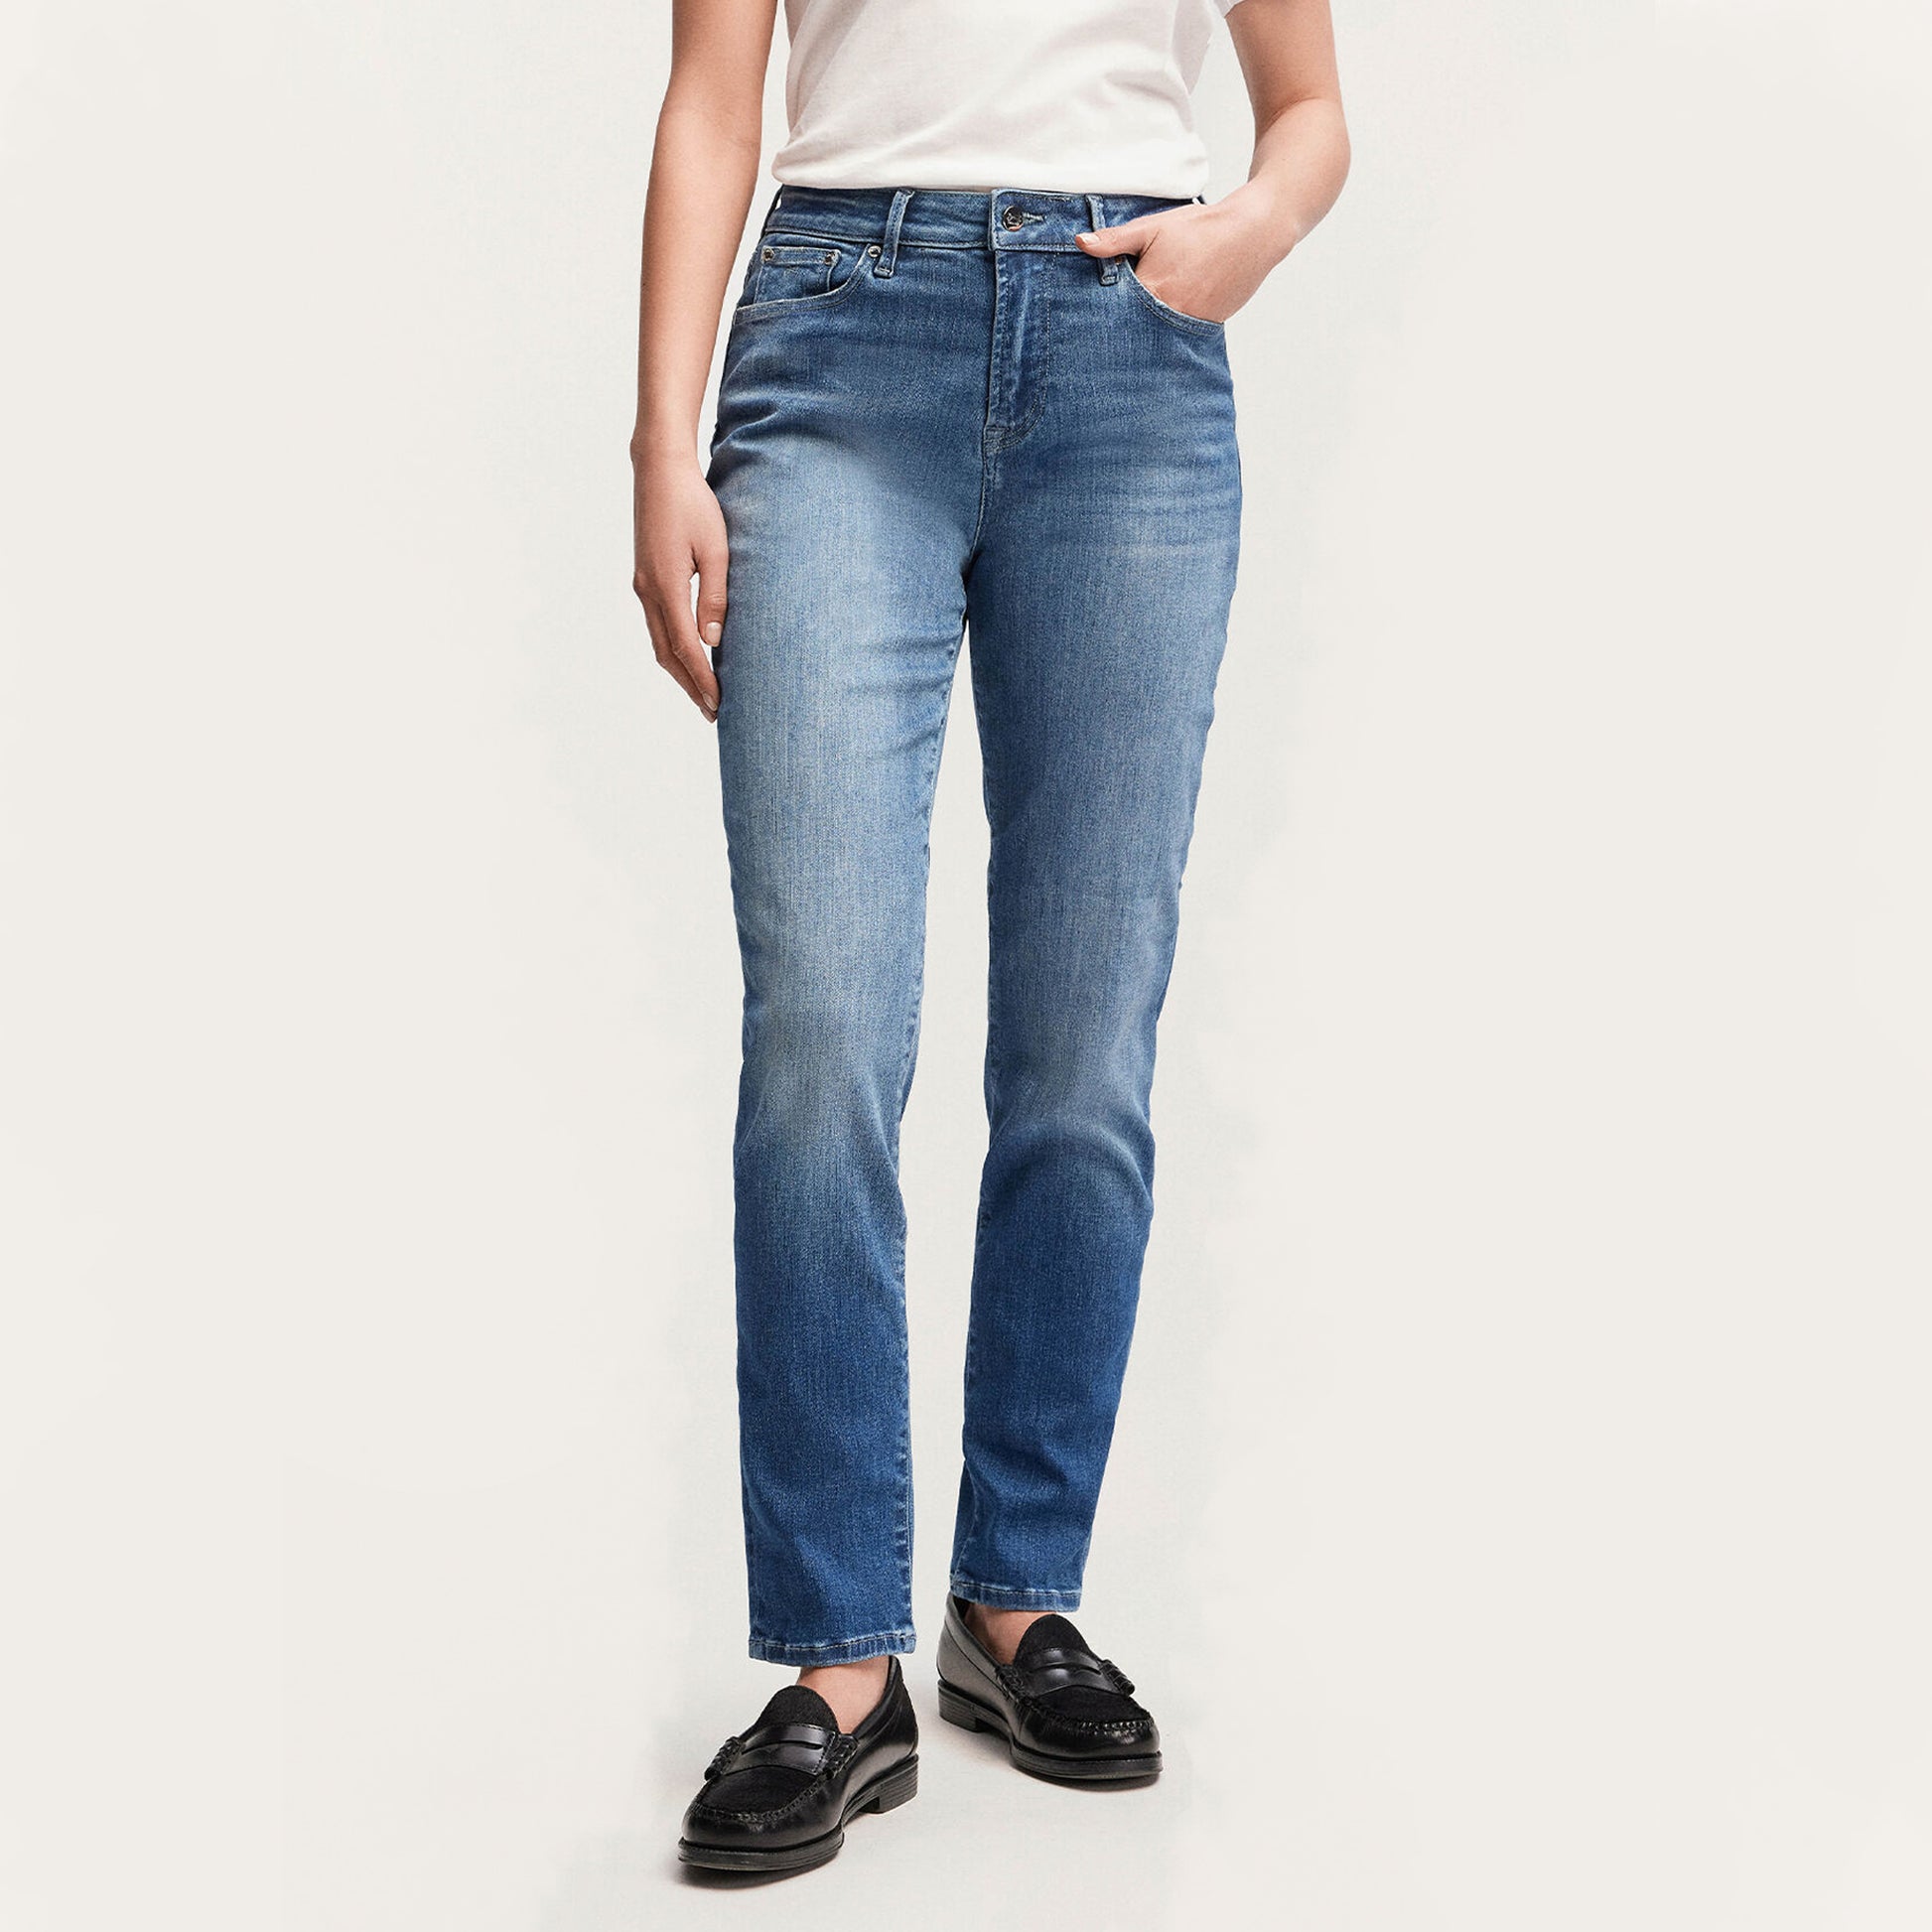 A woman wearing MARGOT High Slim - Light Worn Indigo jeans by Denham.